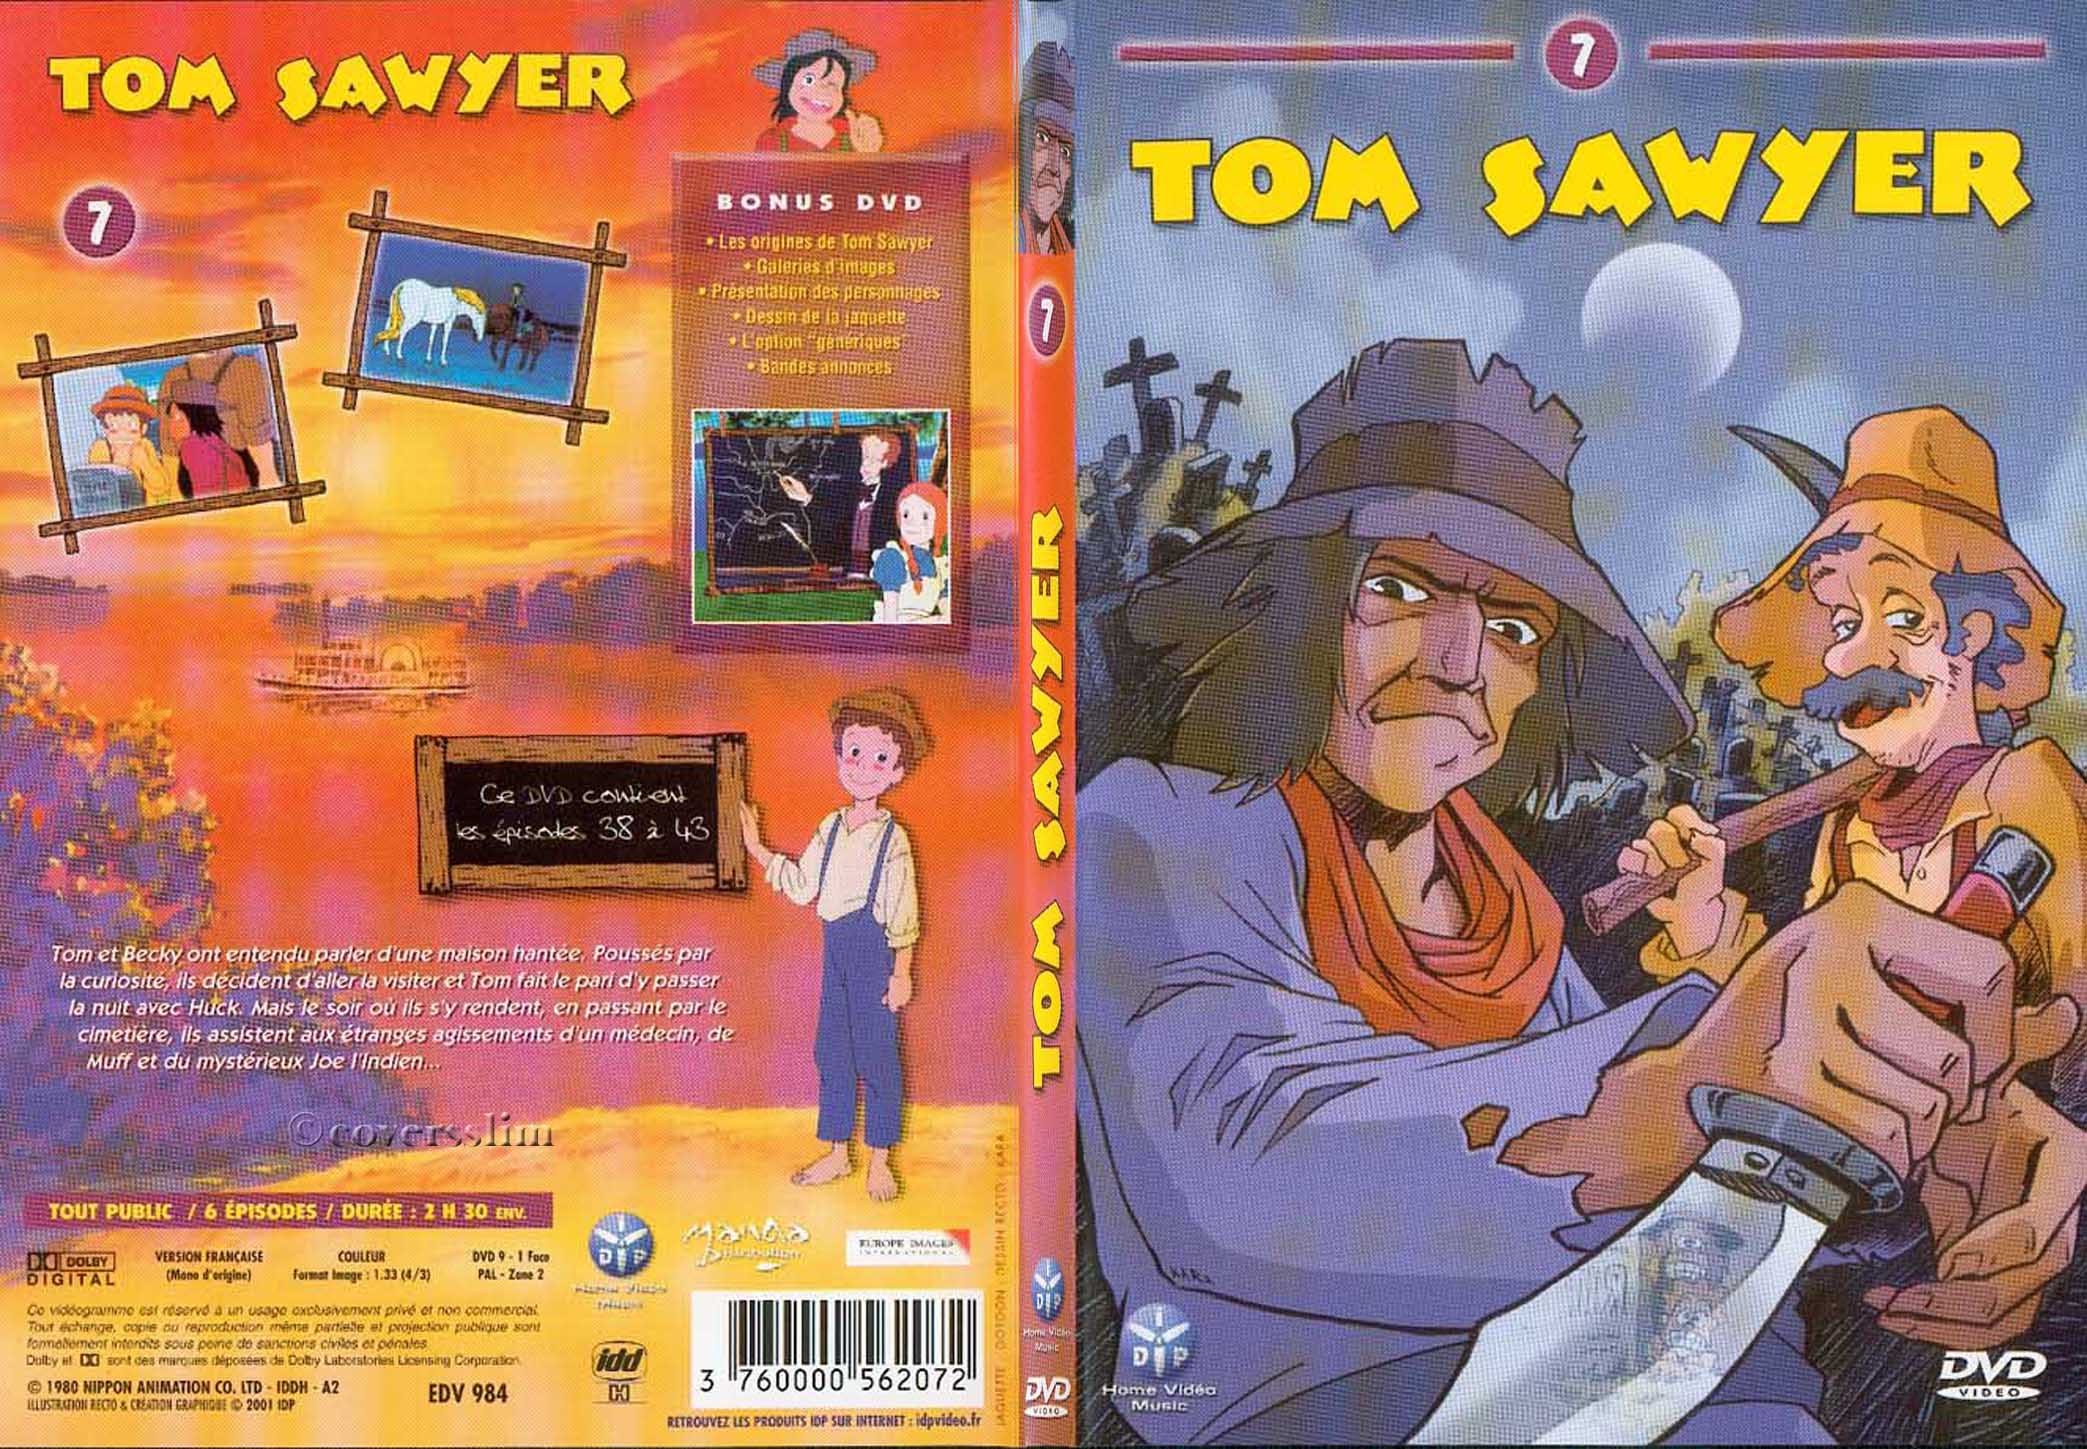 Jaquette DVD Tom Sawyer vol 7 - SLIM v2